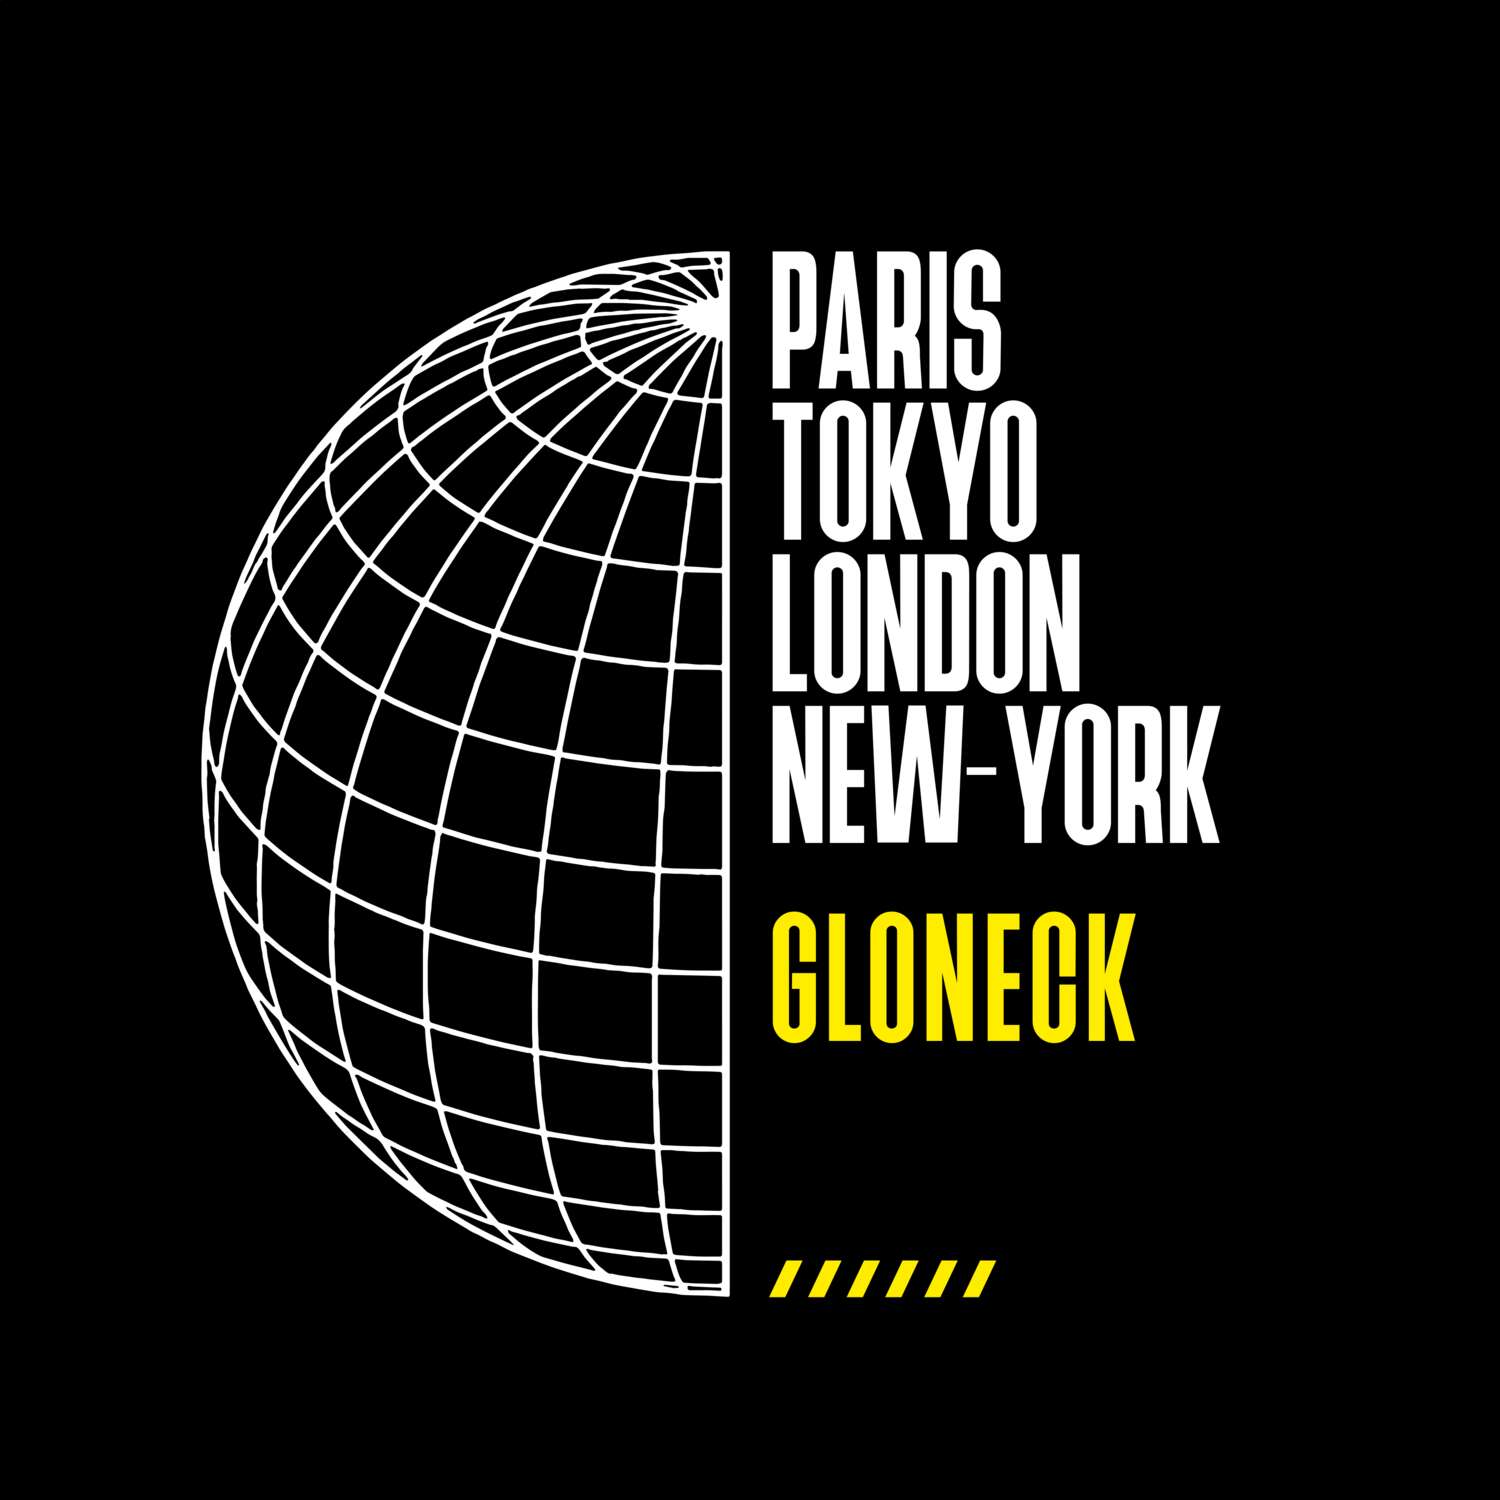 Gloneck T-Shirt »Paris Tokyo London«